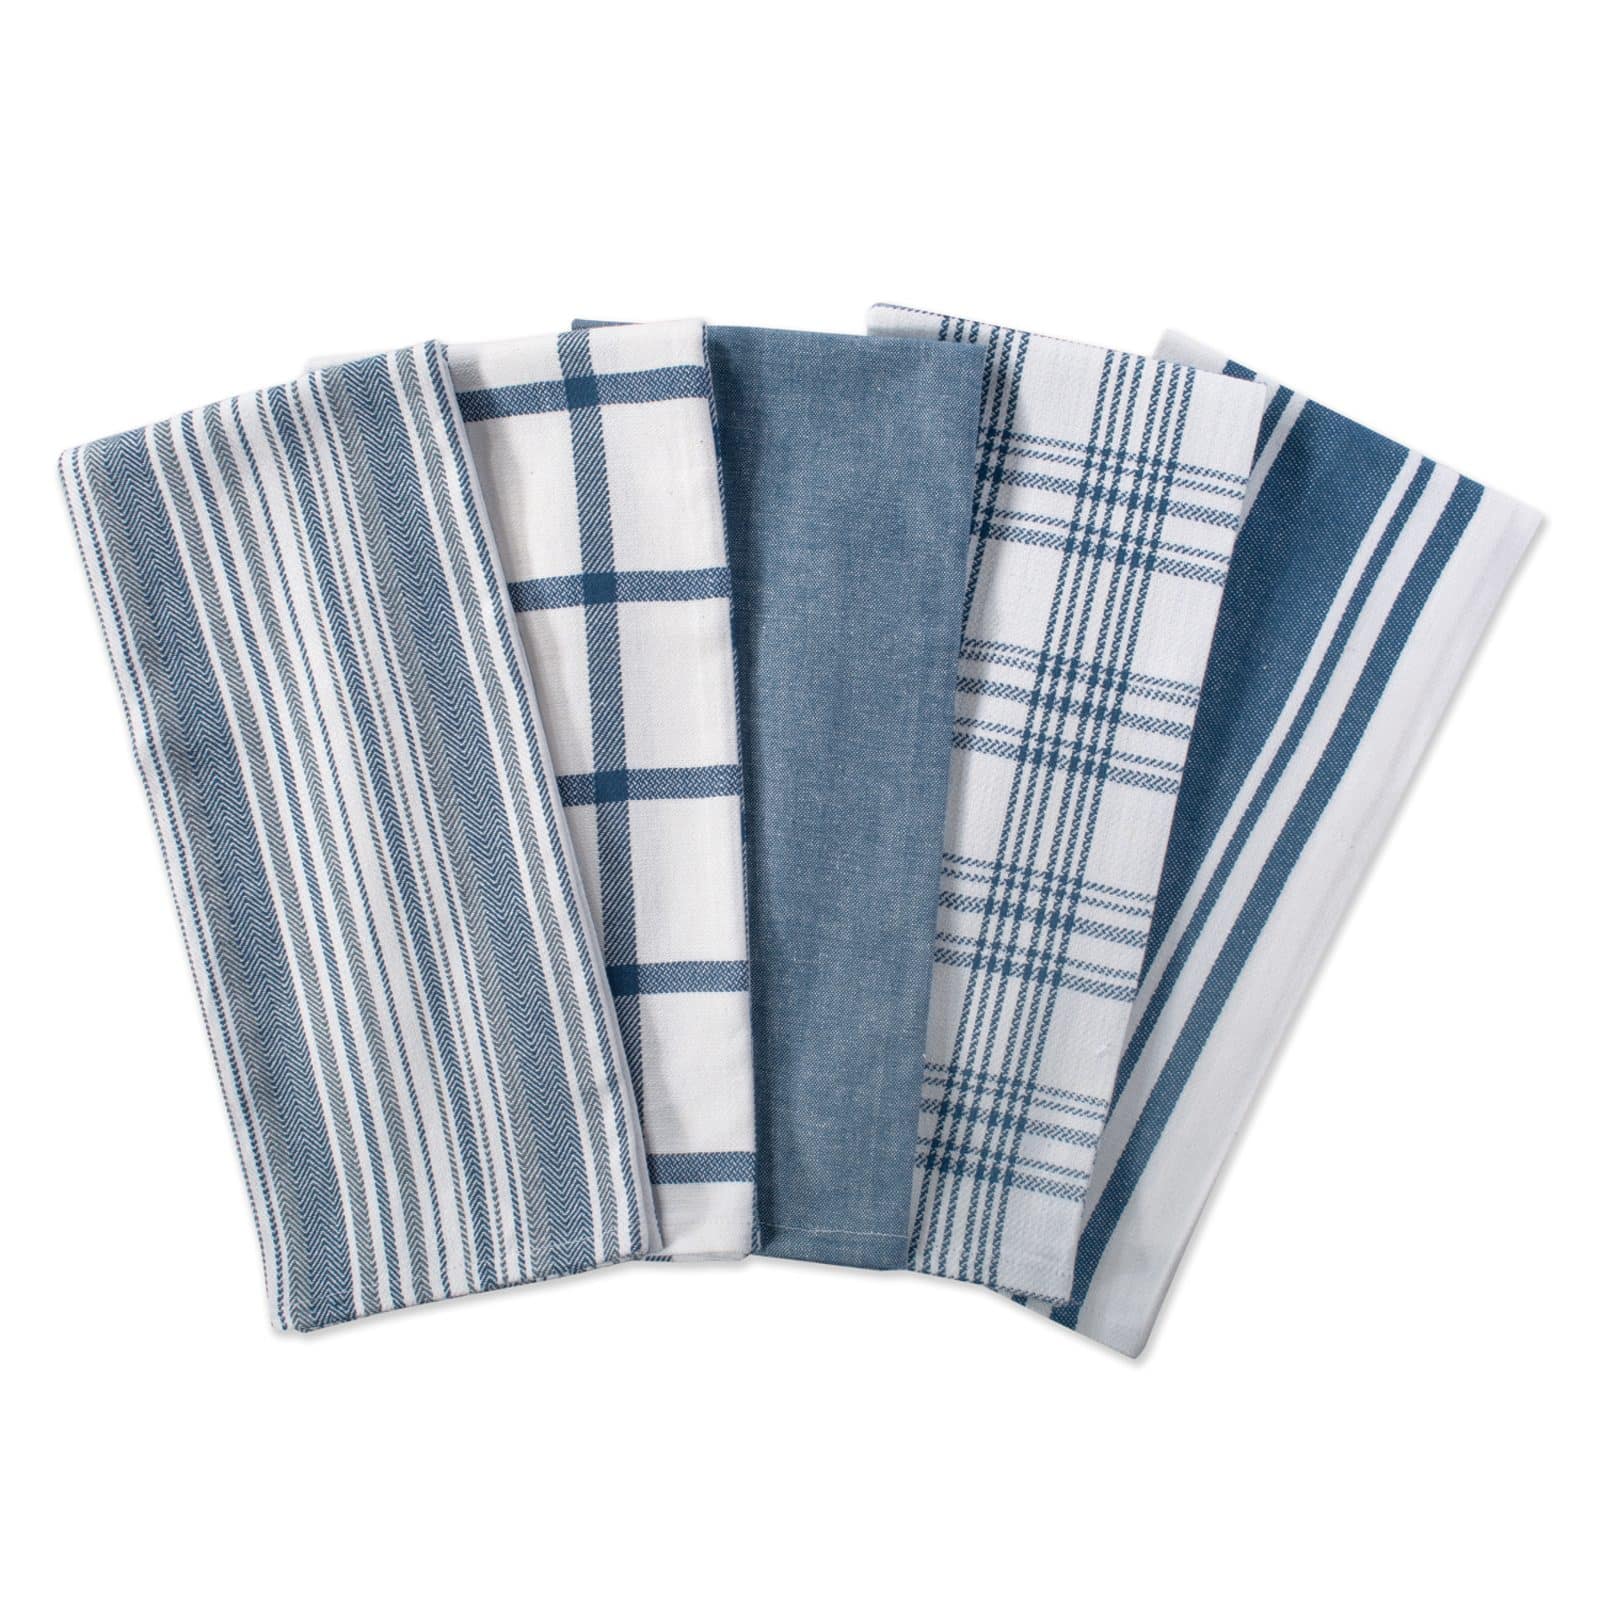 Tagltd Canyon Woven Dishtowel Set Of 4 Midnight Blue Dish Cloth